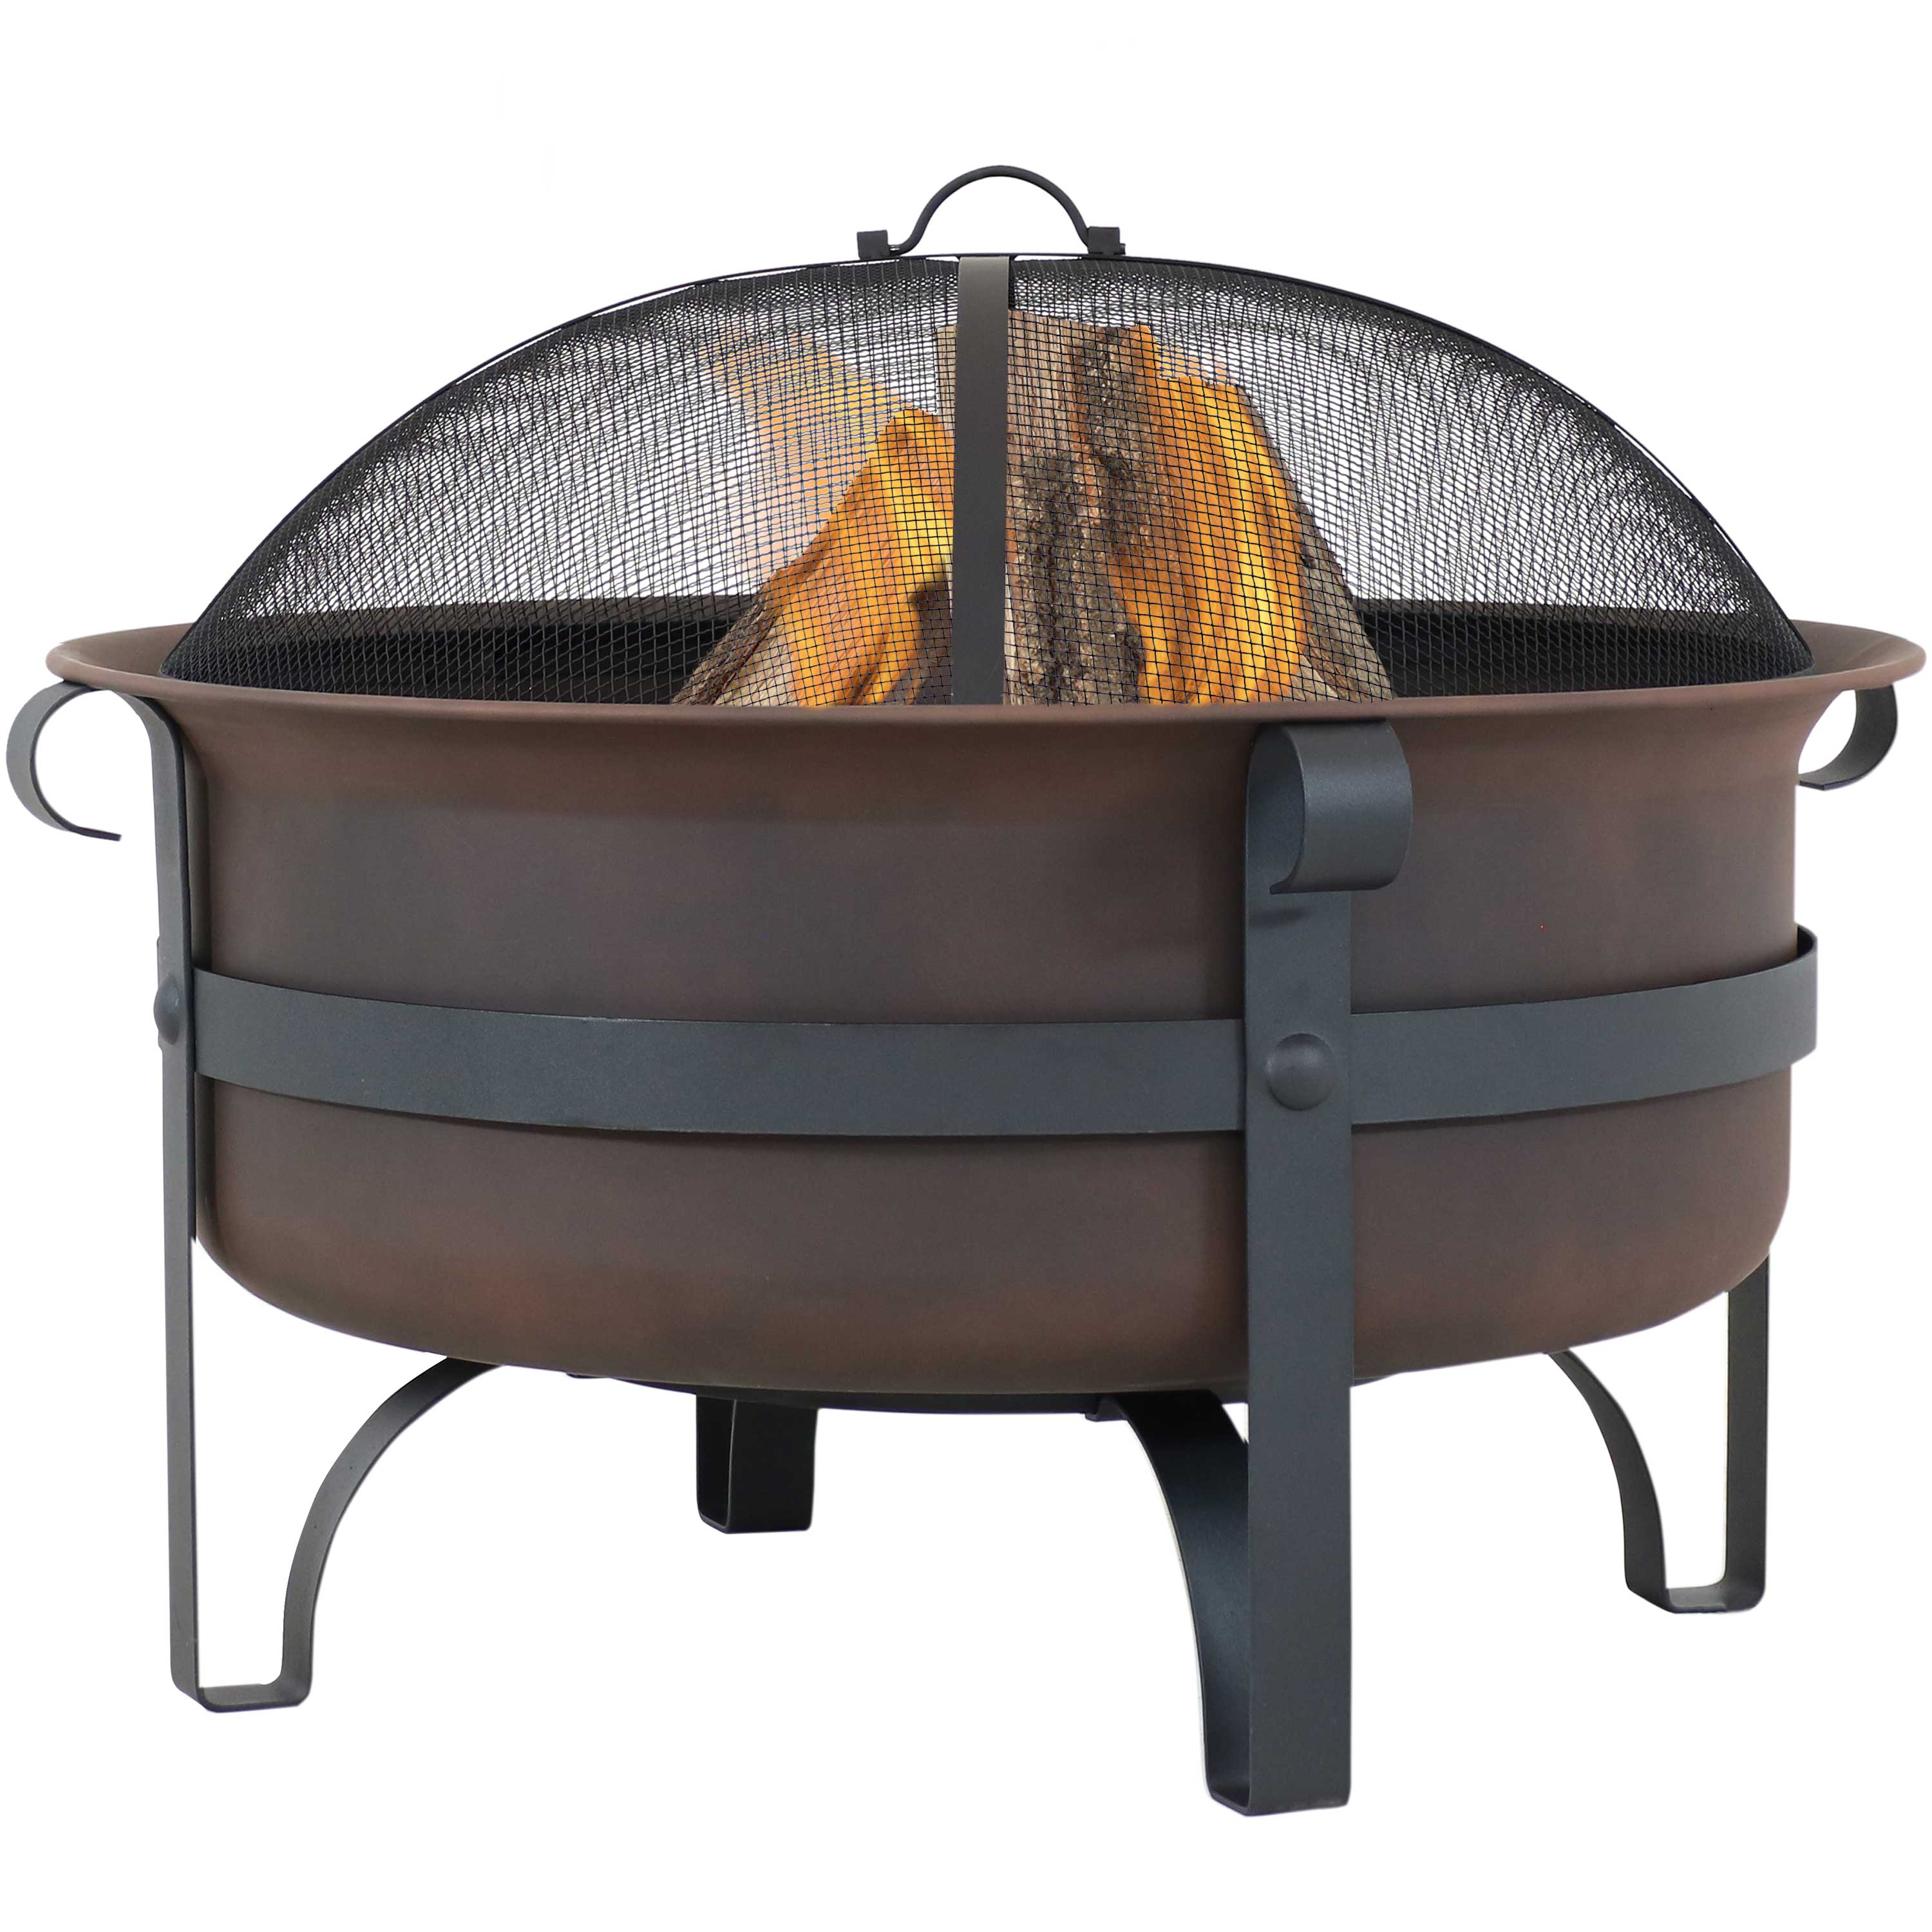 Sunnydaze Steel Cauldron Style Fire Pit with Spark Screen - Bronze - 29-Inch